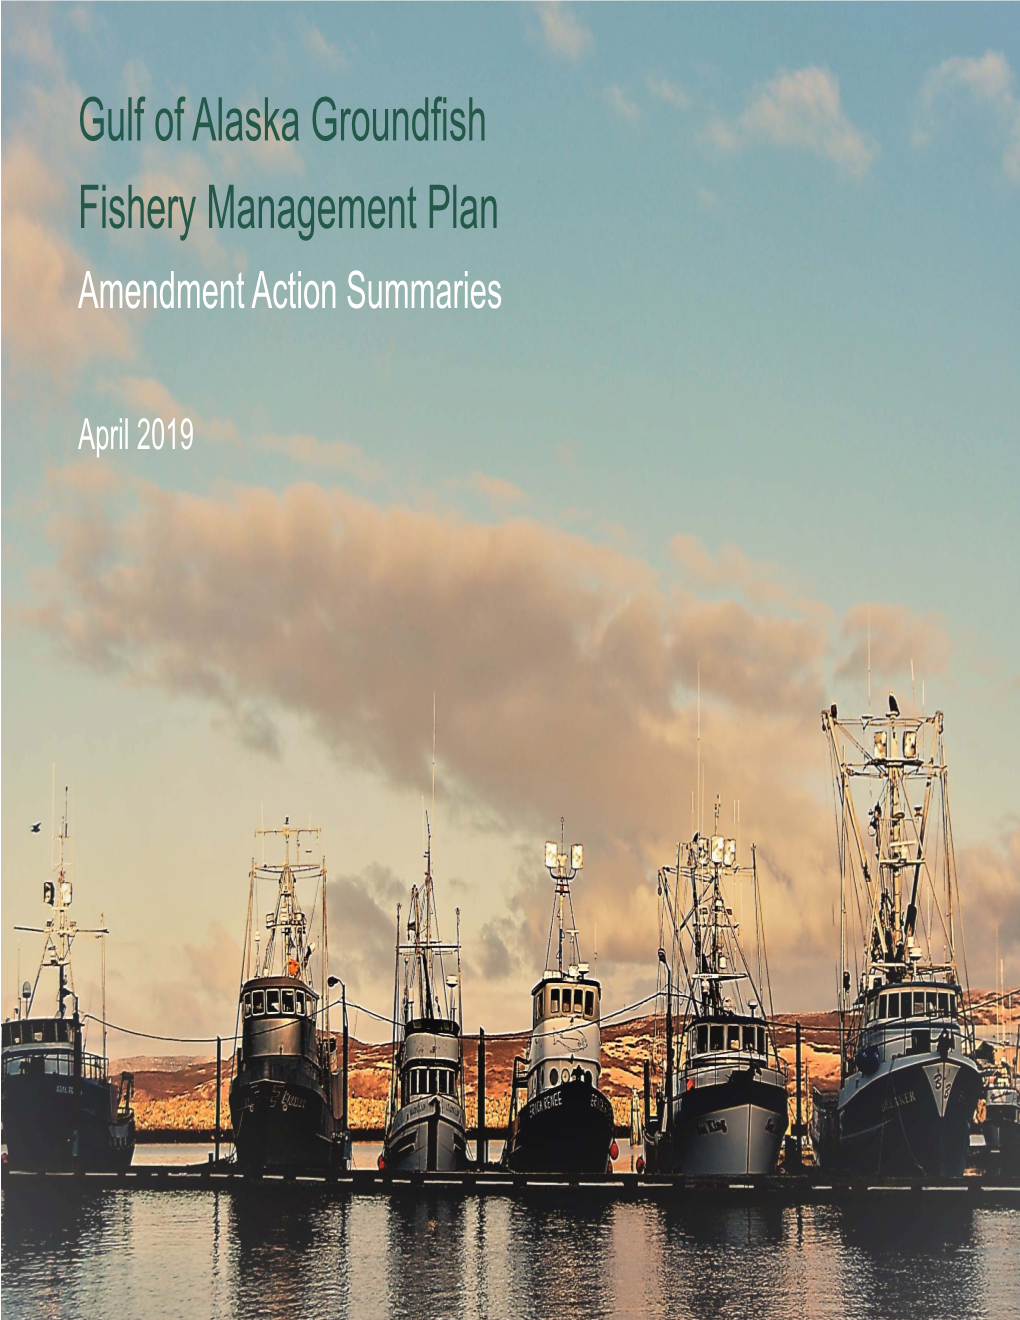 Gulf of Alaska Groundfish Fishery Management Plan Amendment Action Summaries